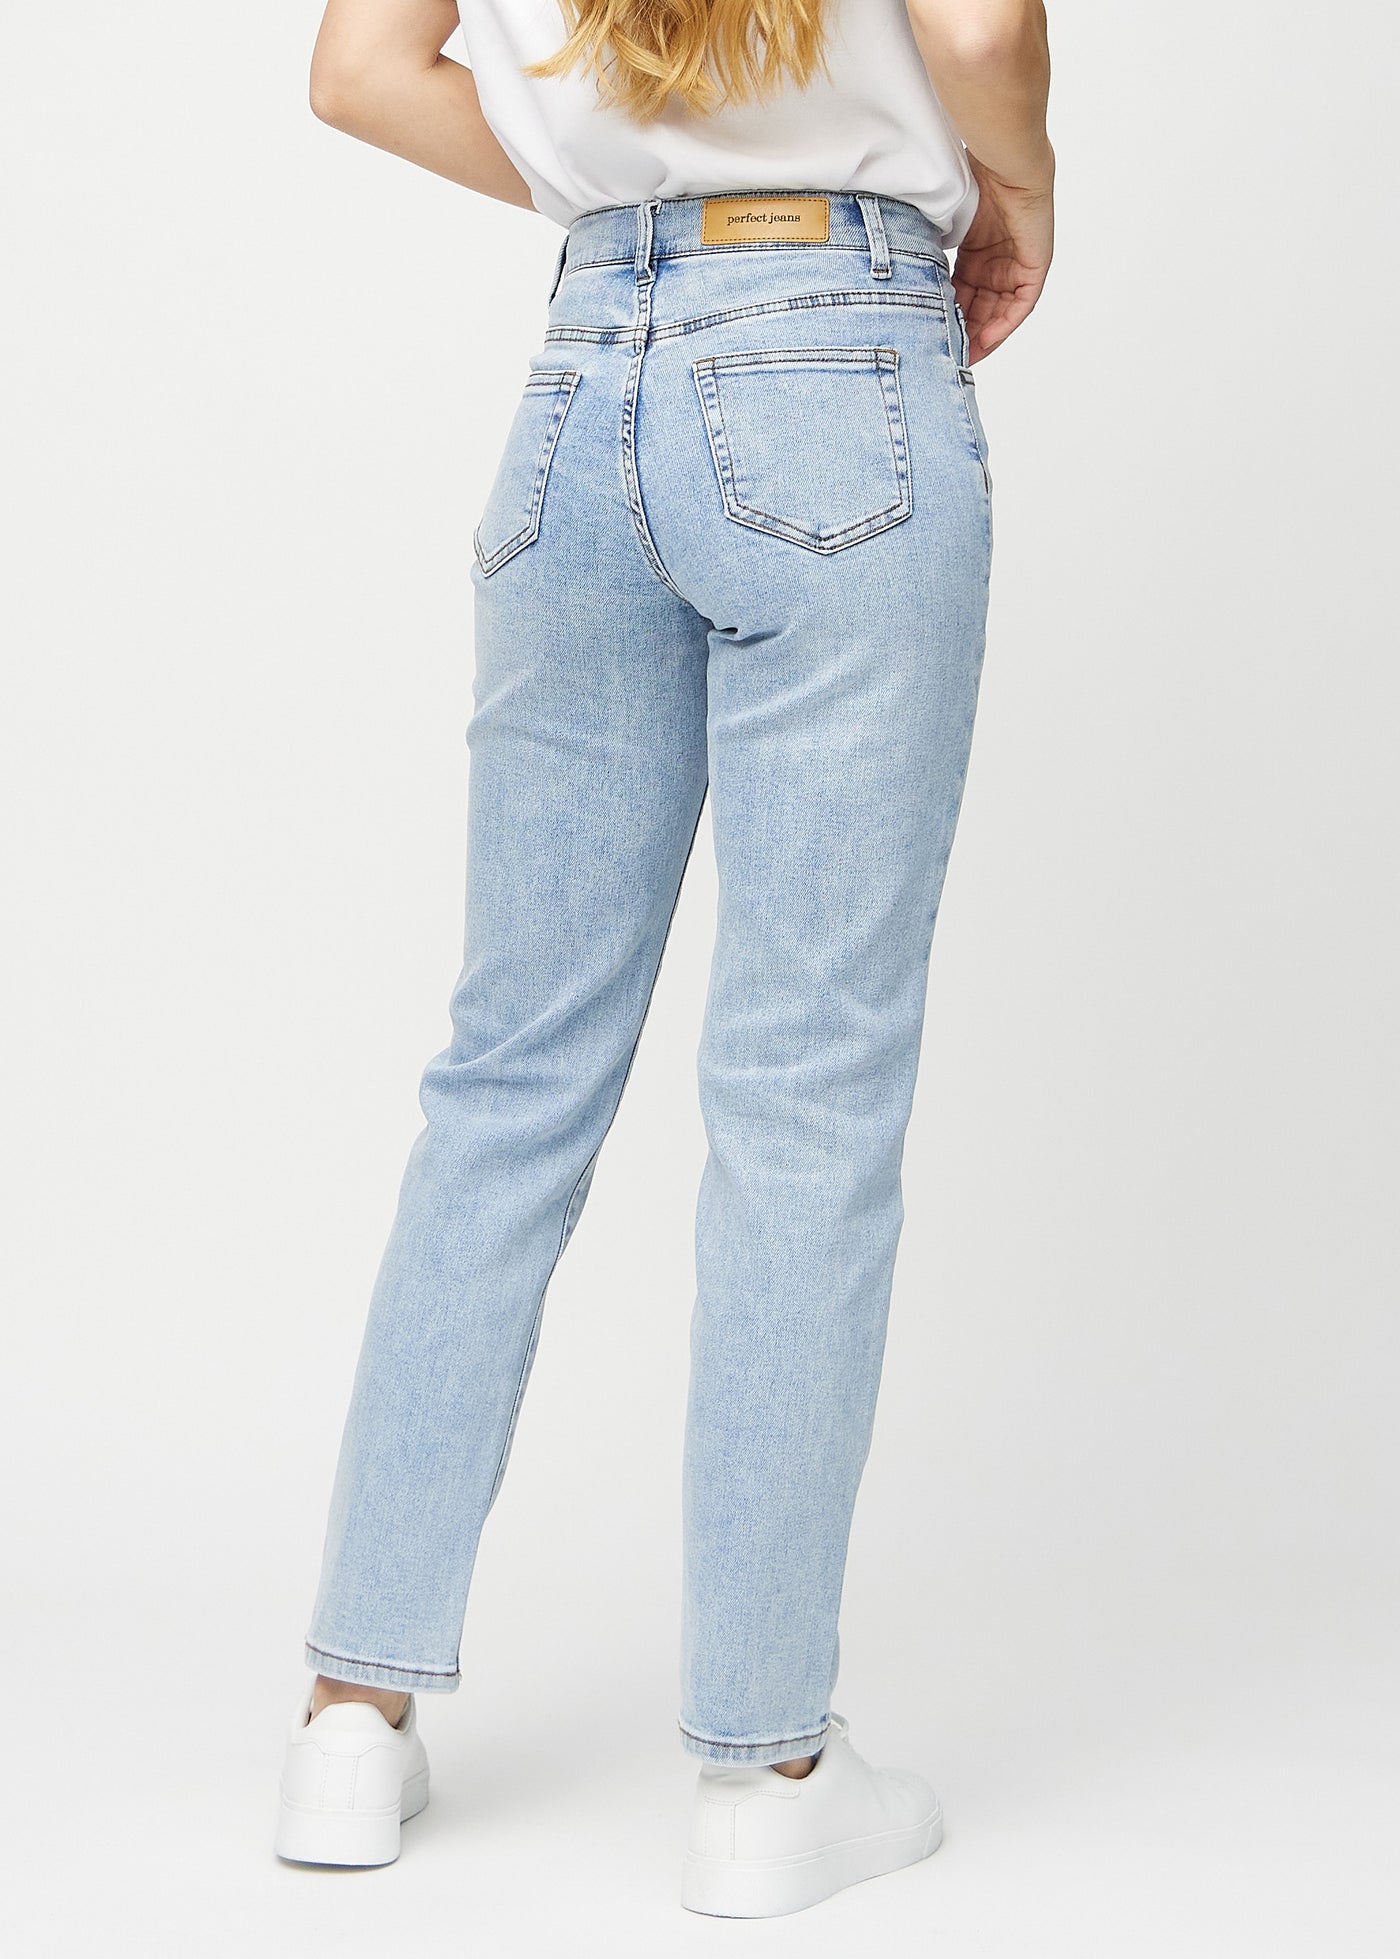 Lys denim regular jeans set bagfra, så man kan se hele produktet.